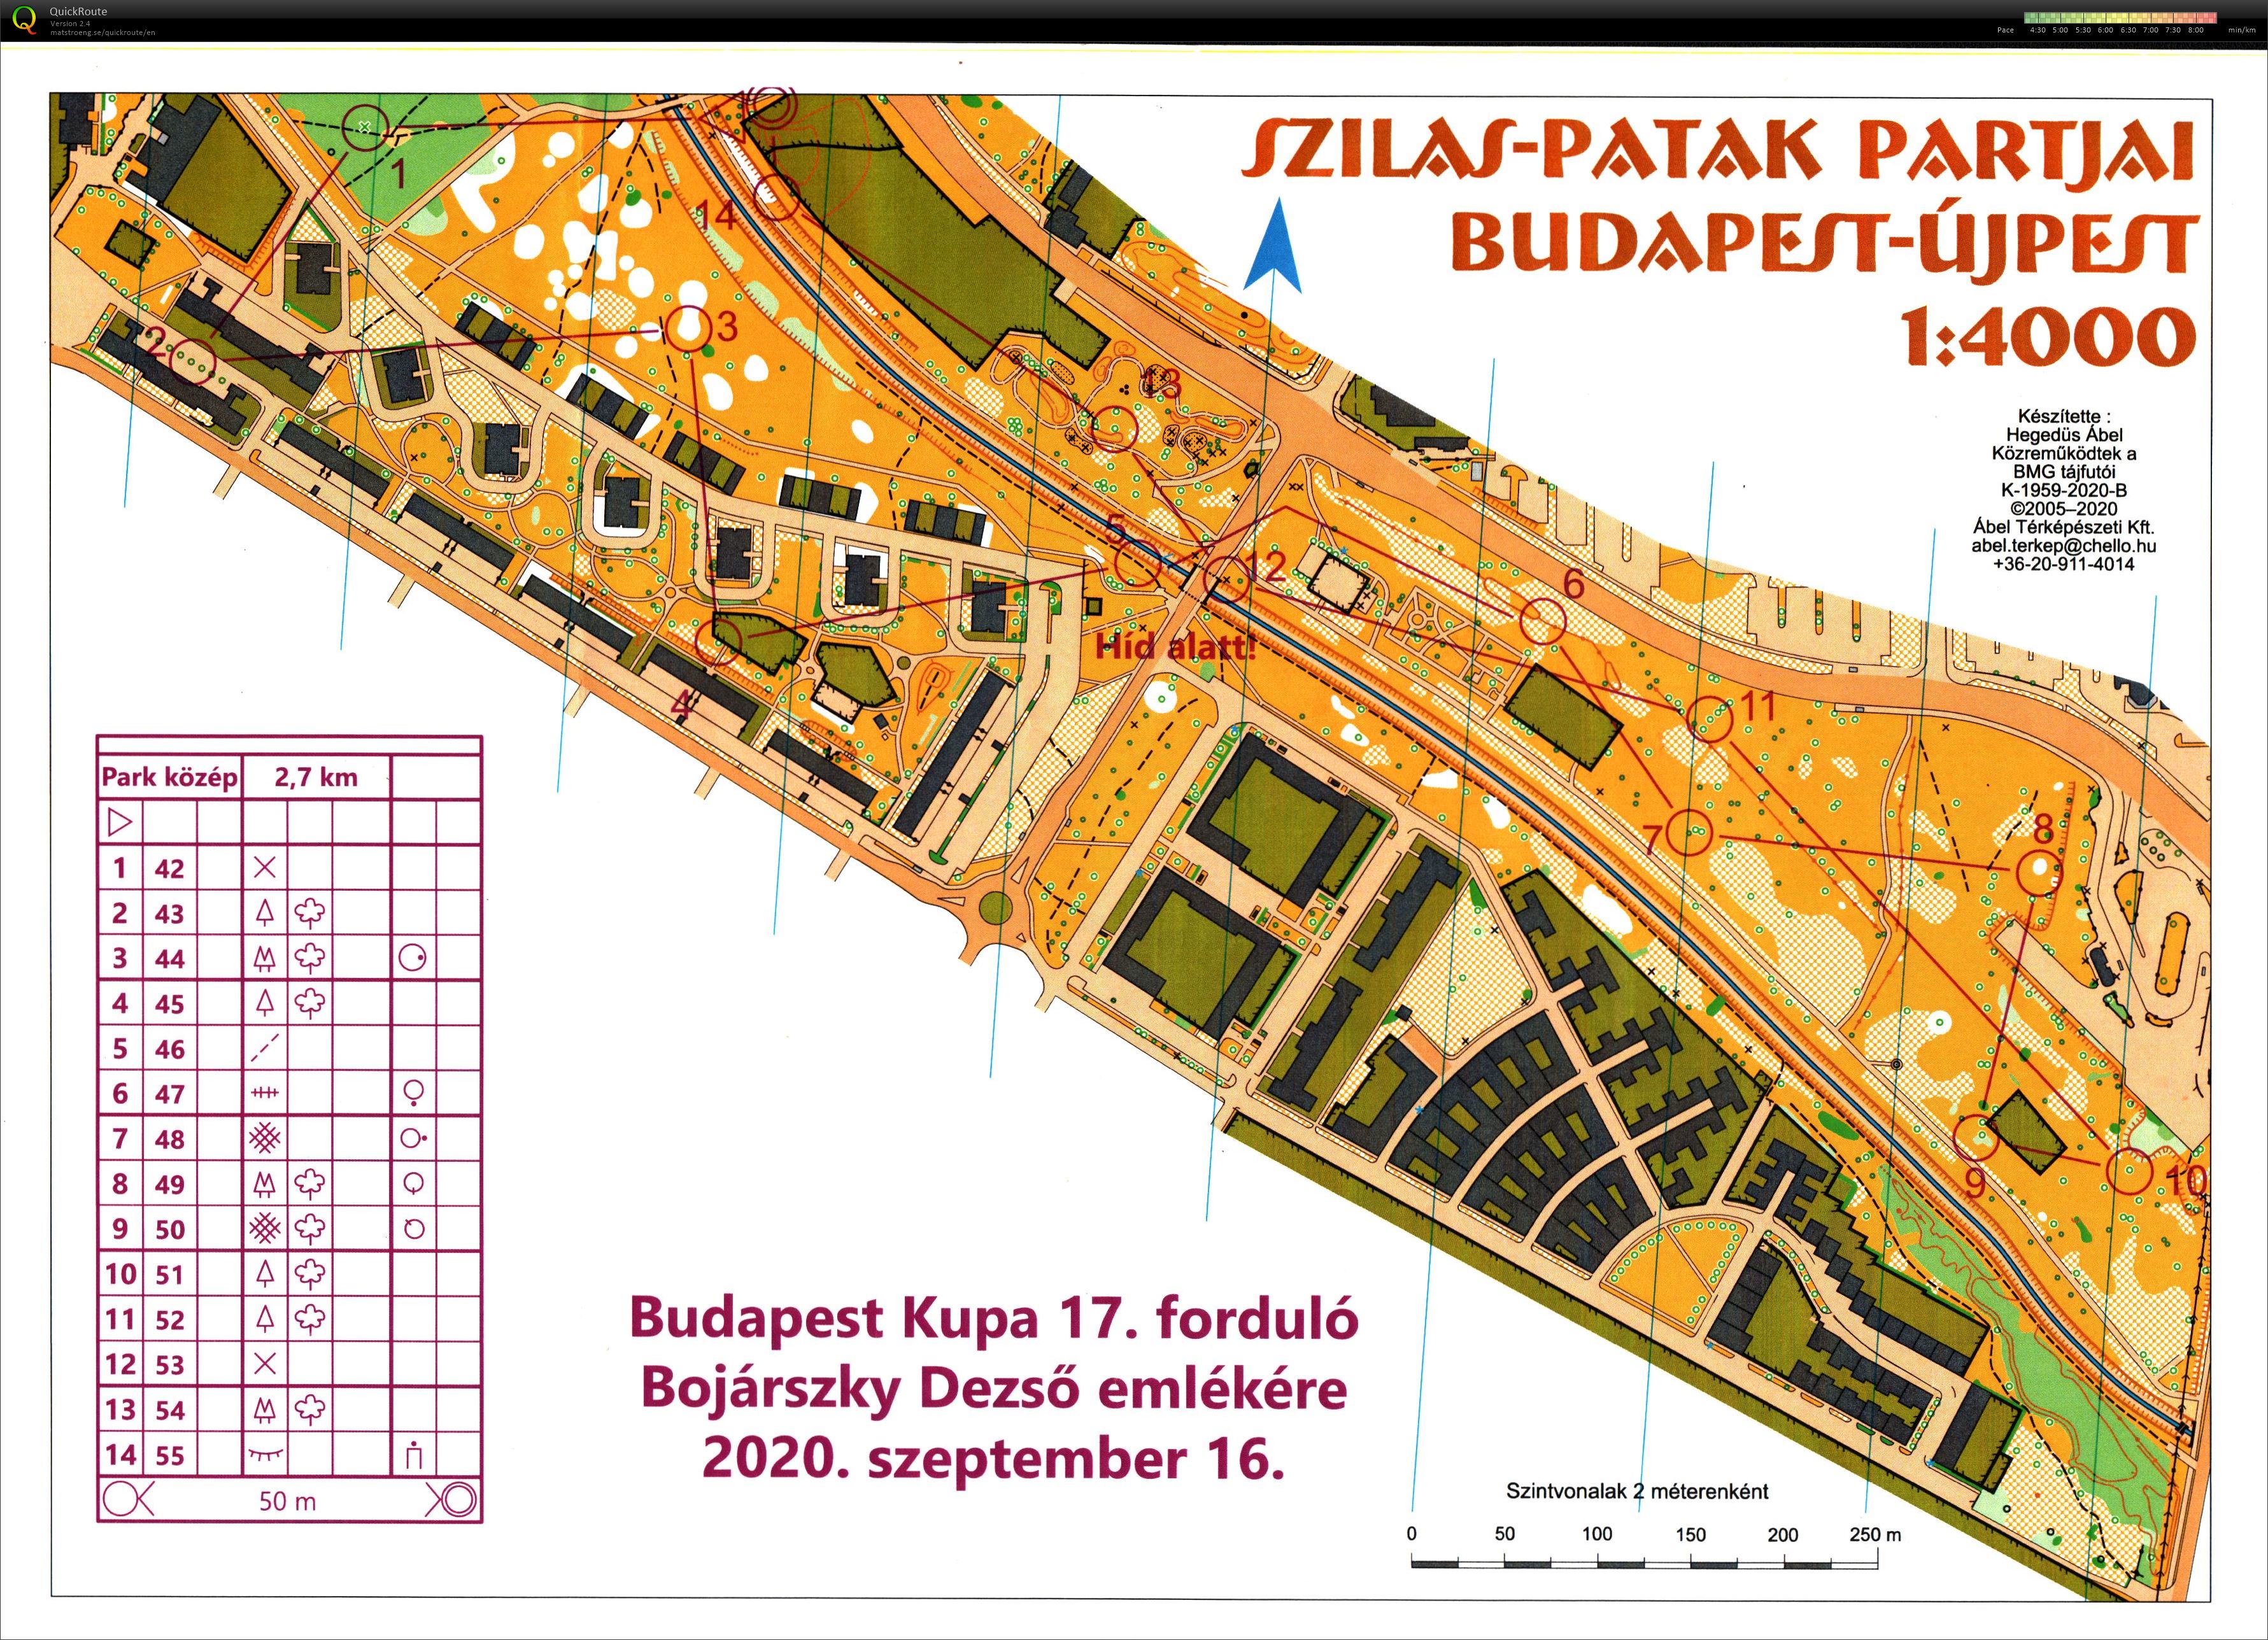 Budapest Kupa 17. forduló (2020-09-16)